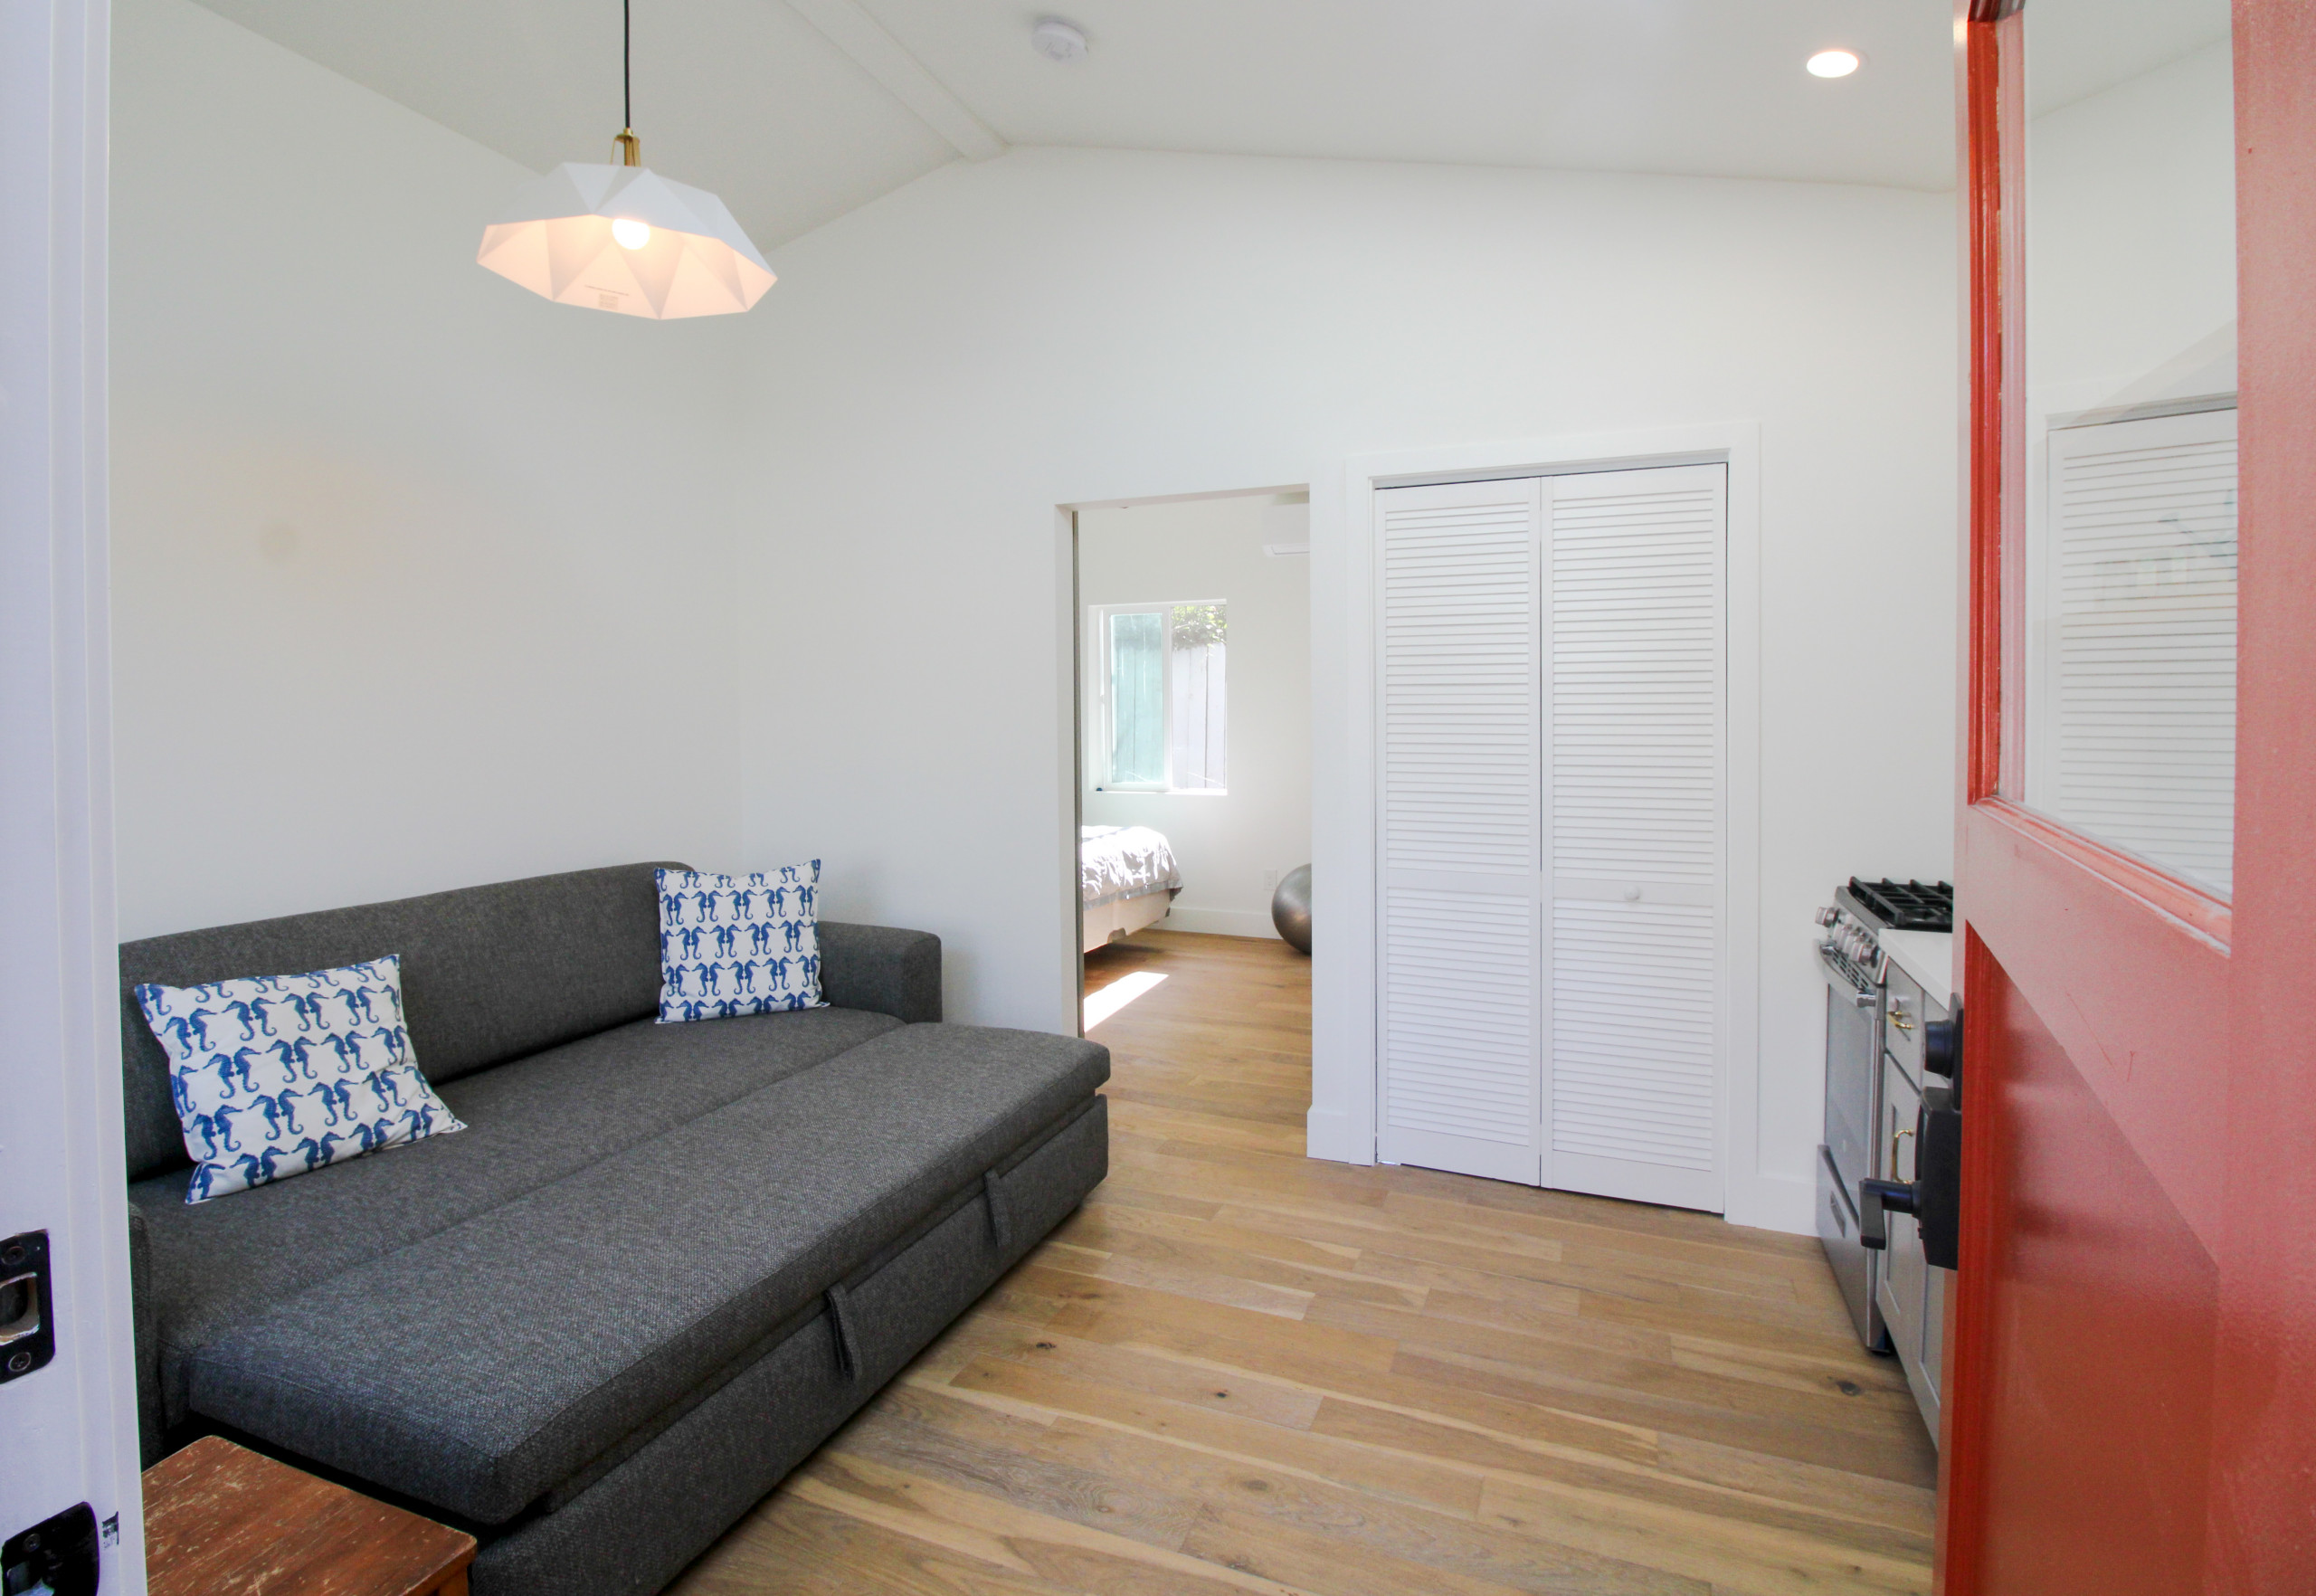 Eagle Rock, CA / Complete Accessory Dwelling Unit Build / Main Room